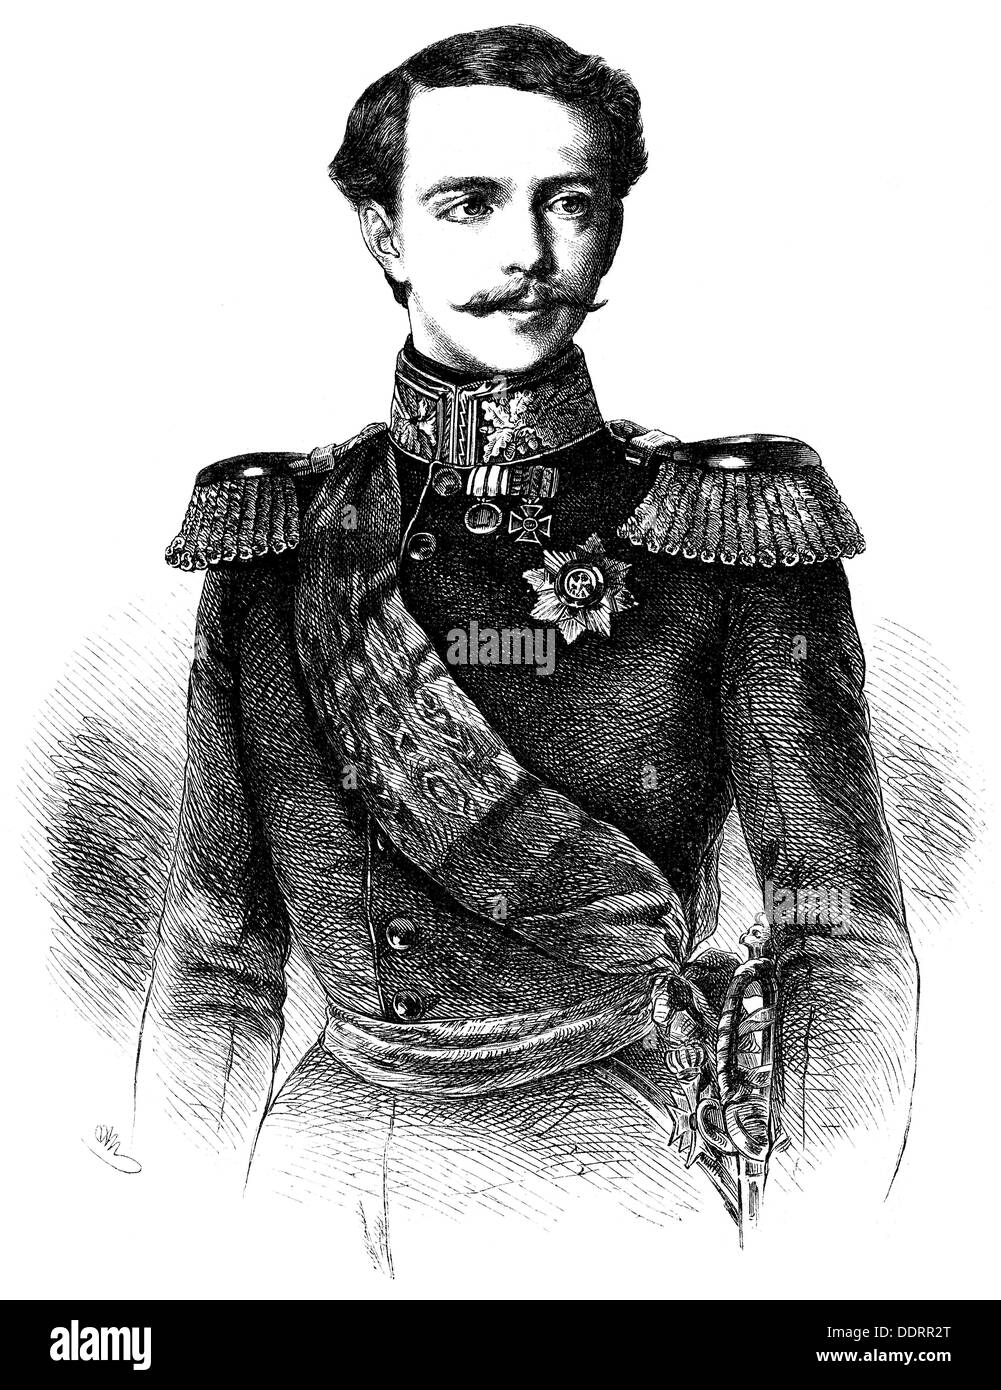 Charles Alexander, 24.6.1818 - 5.1.1901, Grand-duc de Saxe-Weimar-Eisenach 8.7.1853 - 5.1.1901, demi-longueur, gravure en bois d'août Neumann, vers 1860, Banque D'Images